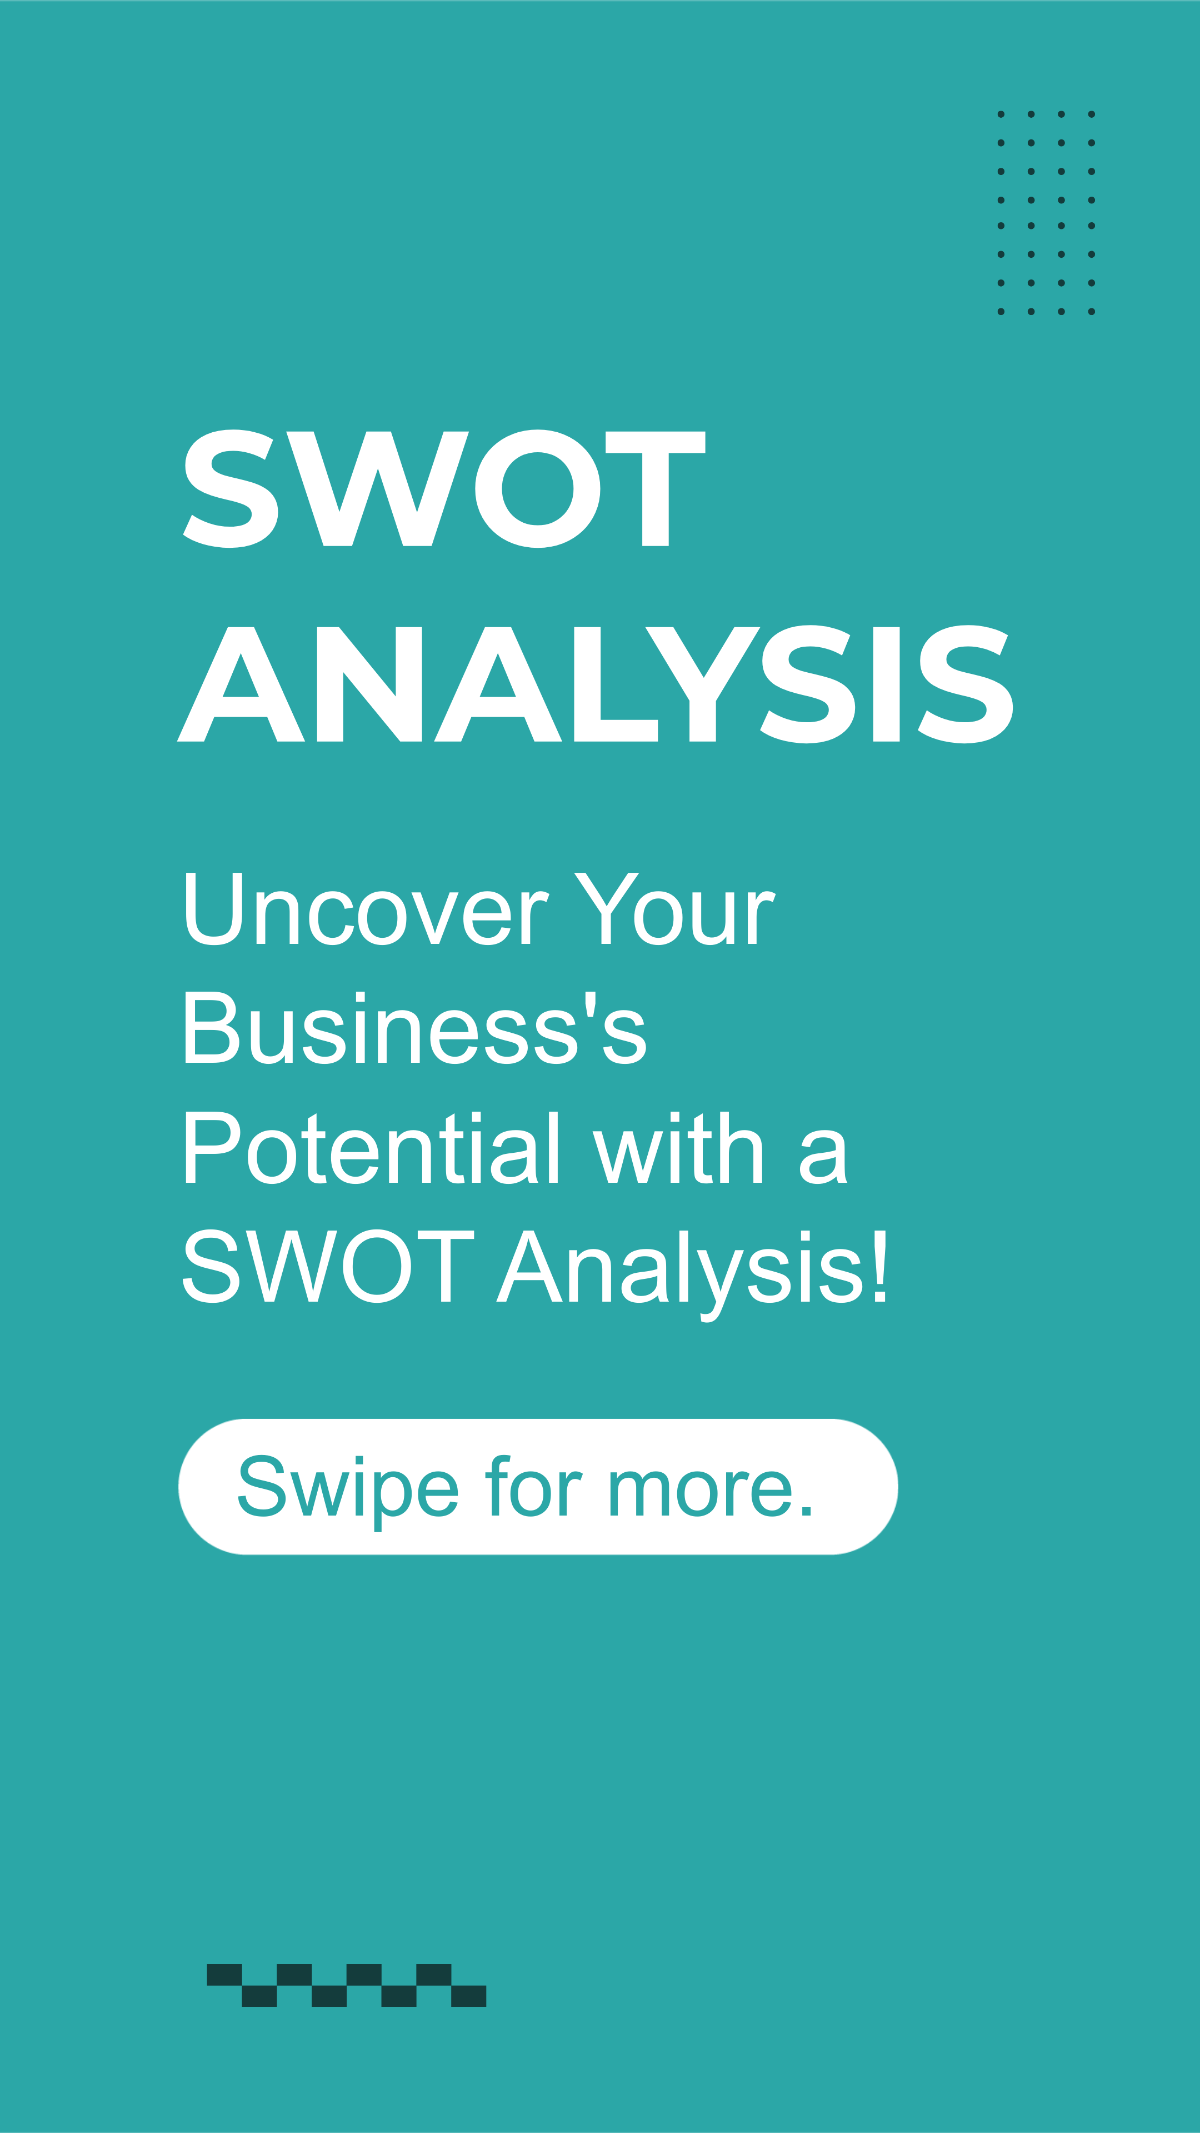 Free SWOT Analysis Carousel Instagram Post Template